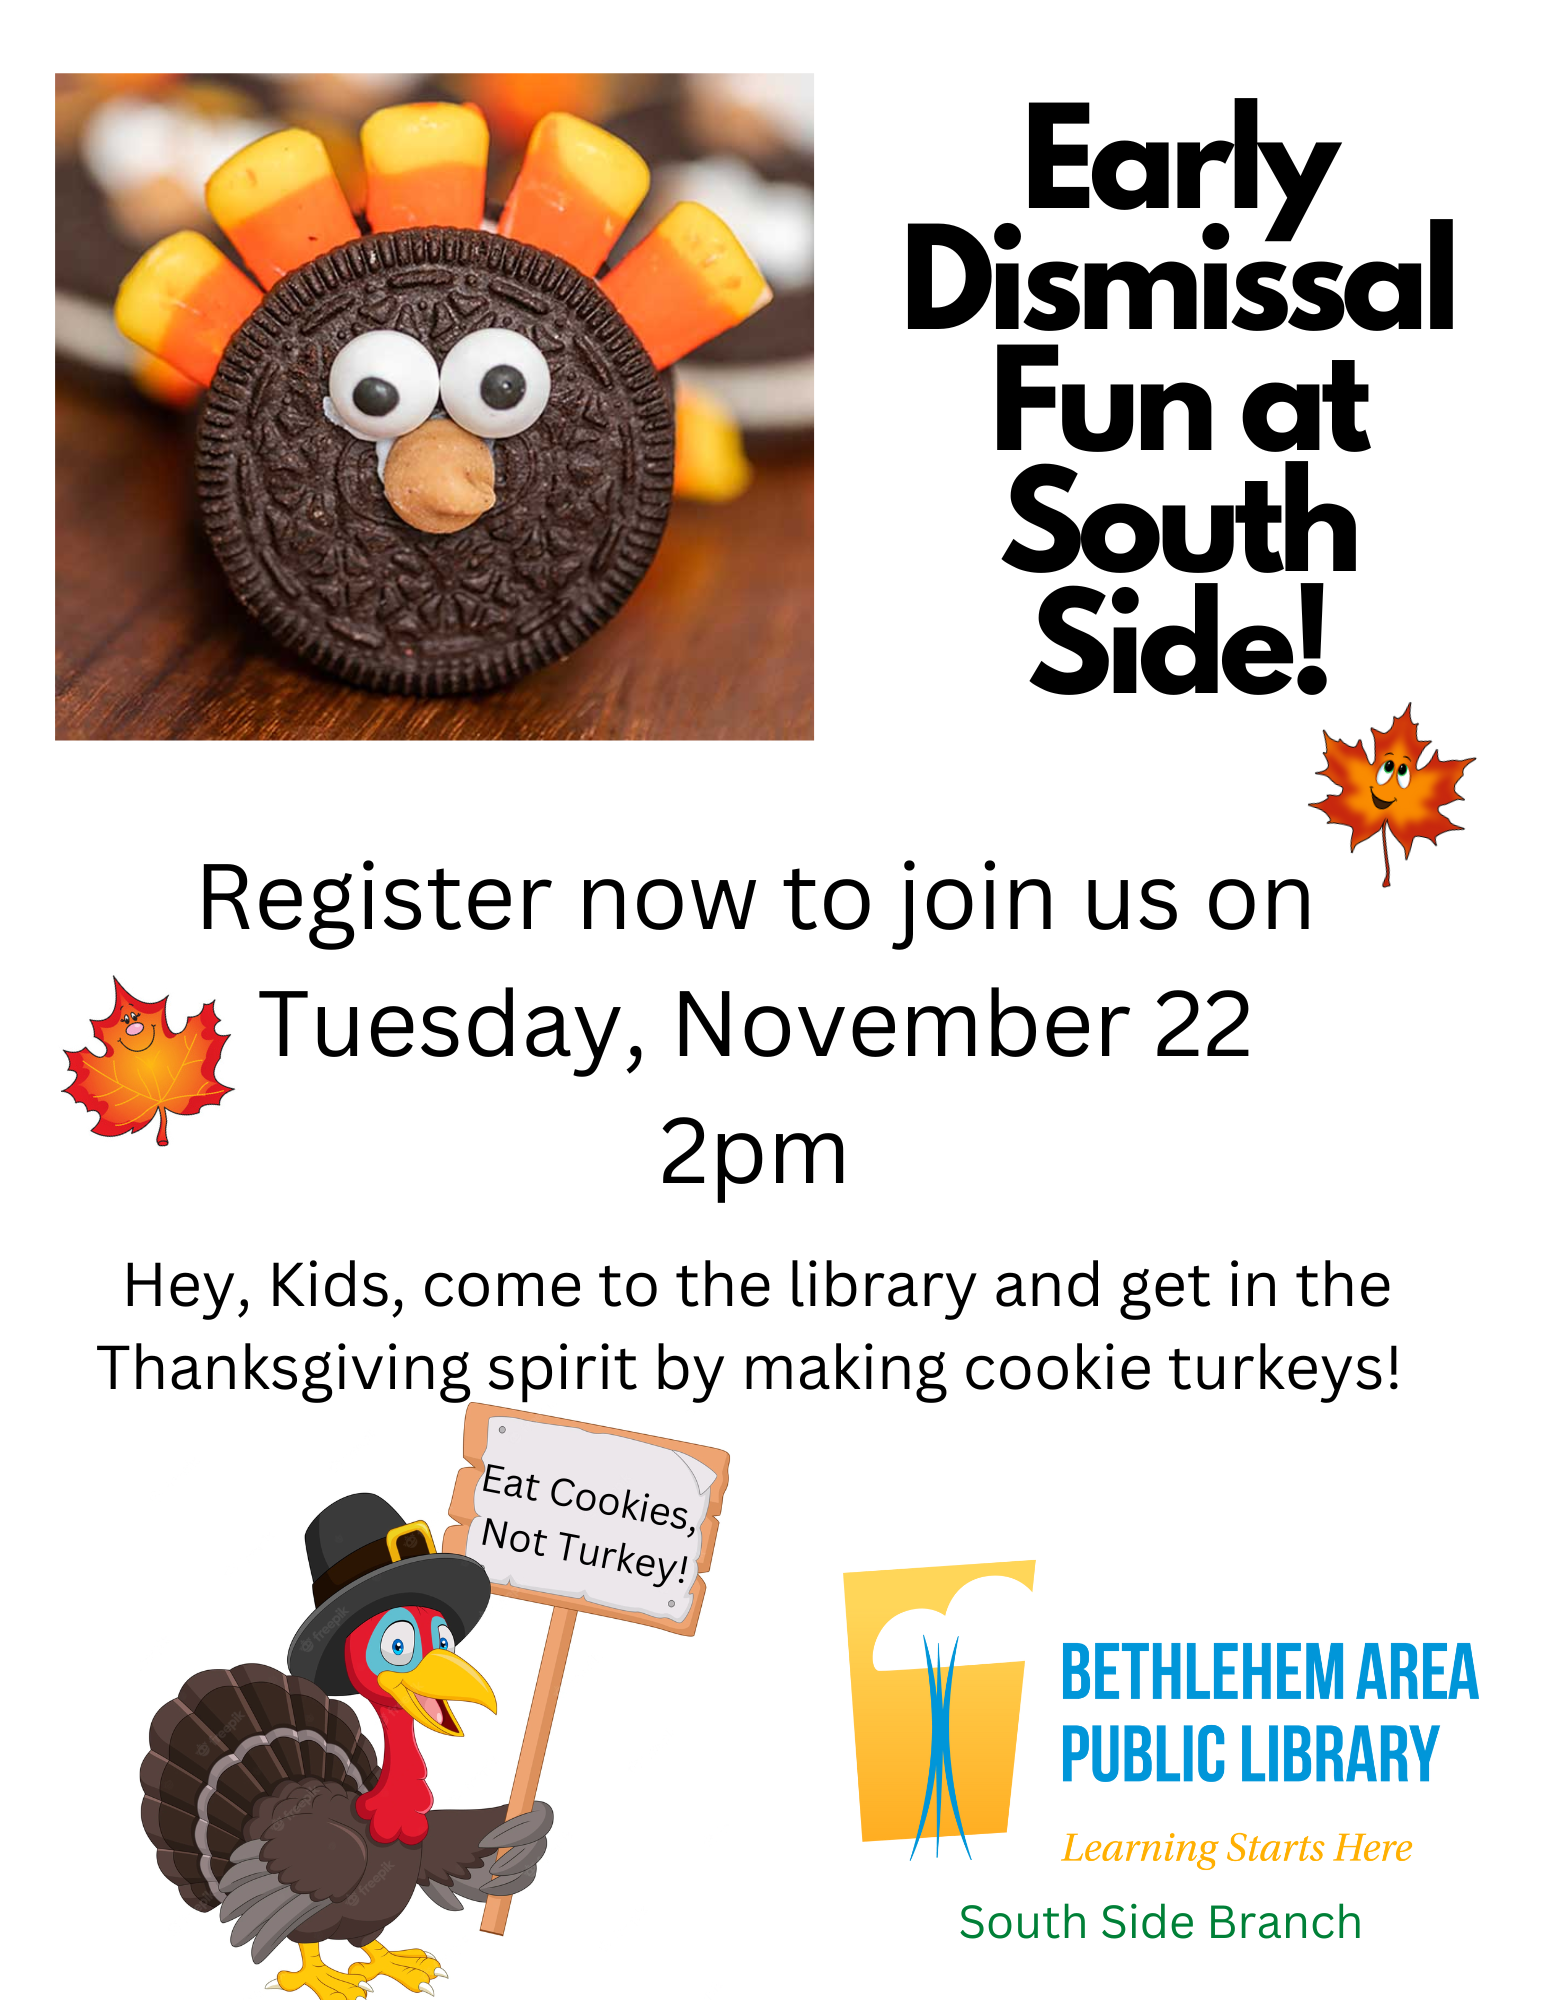 join us to make some fun turkeys!